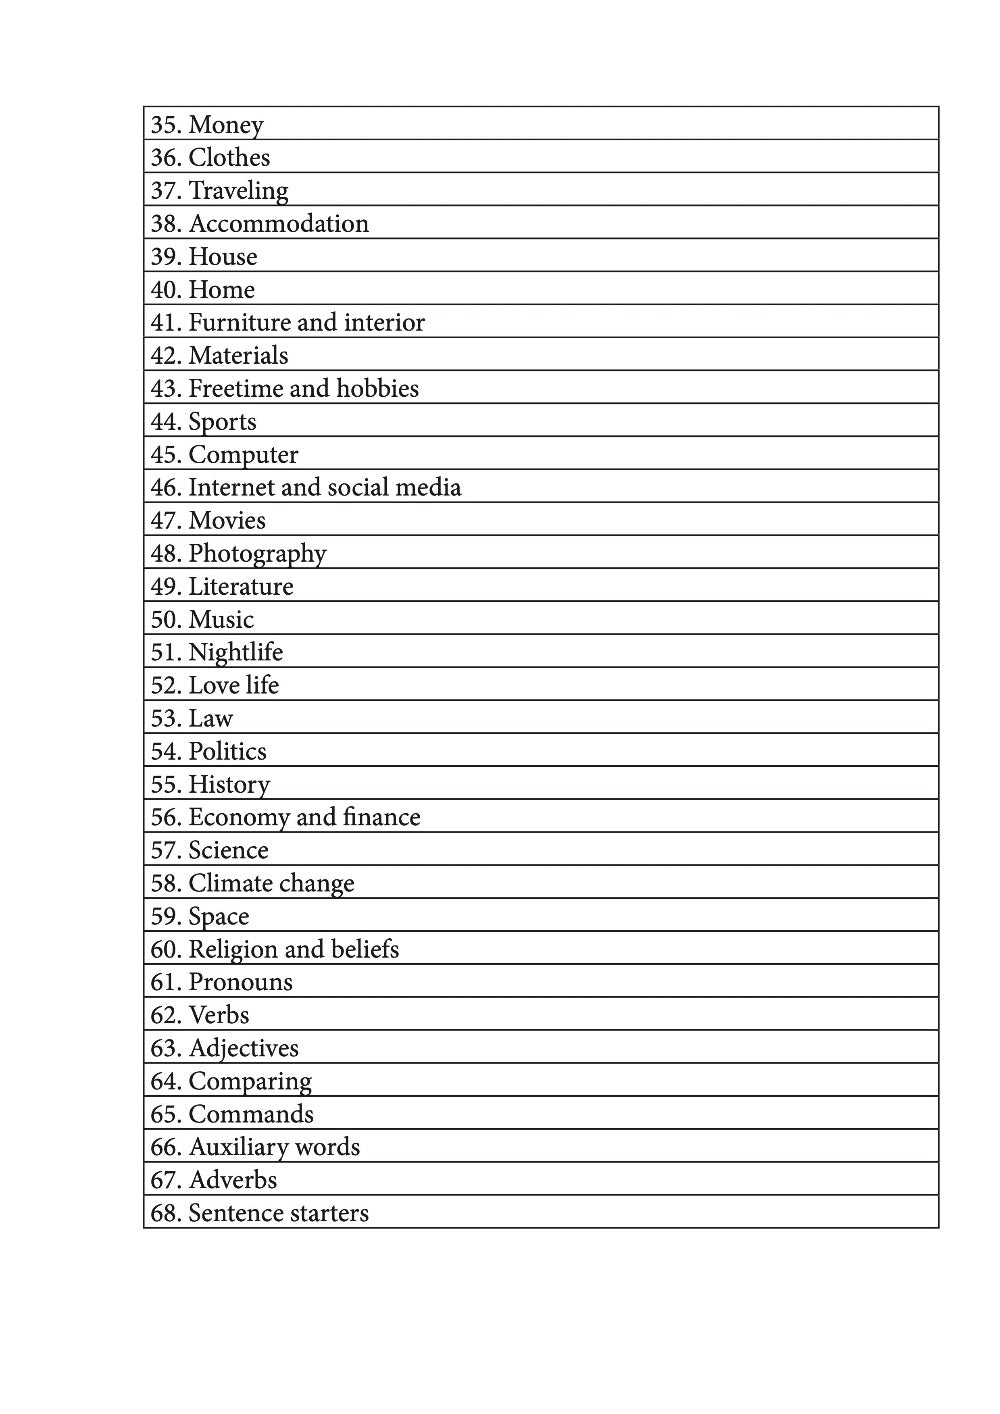 Kunama language learning notebook contents page 2